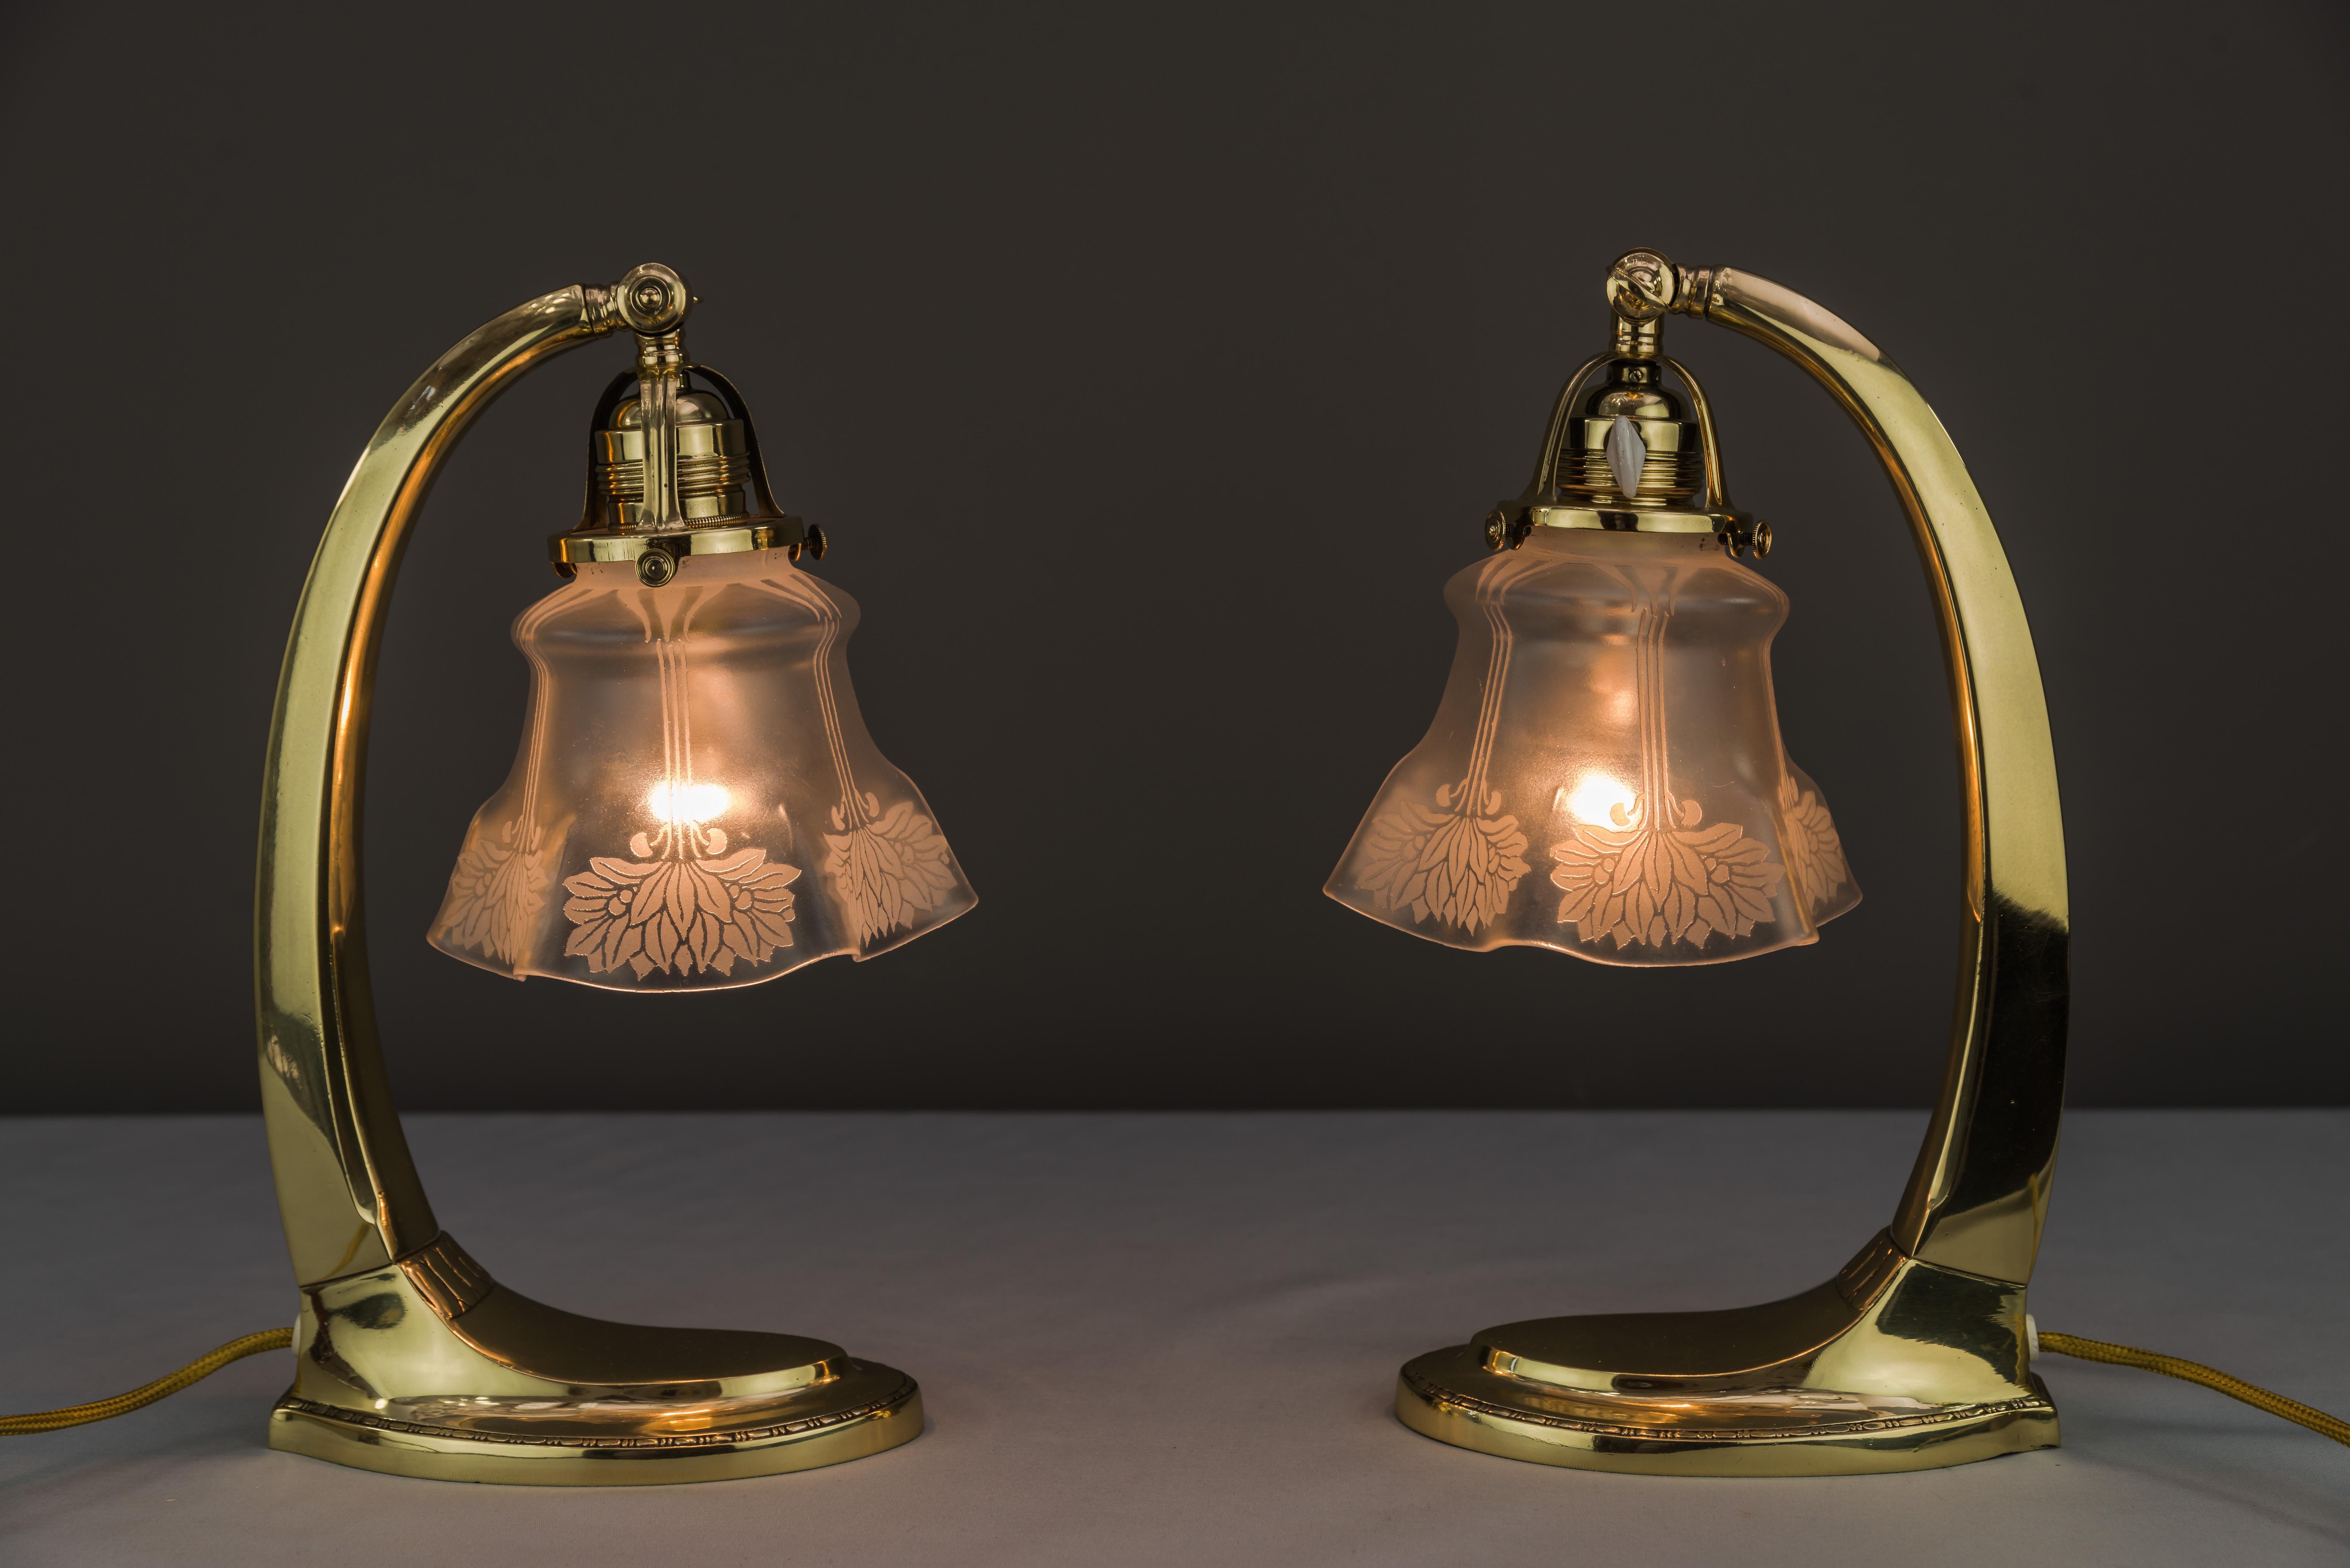 Two Jugendstil Table Lamps 1907 with Original Glas Shades For Sale 3